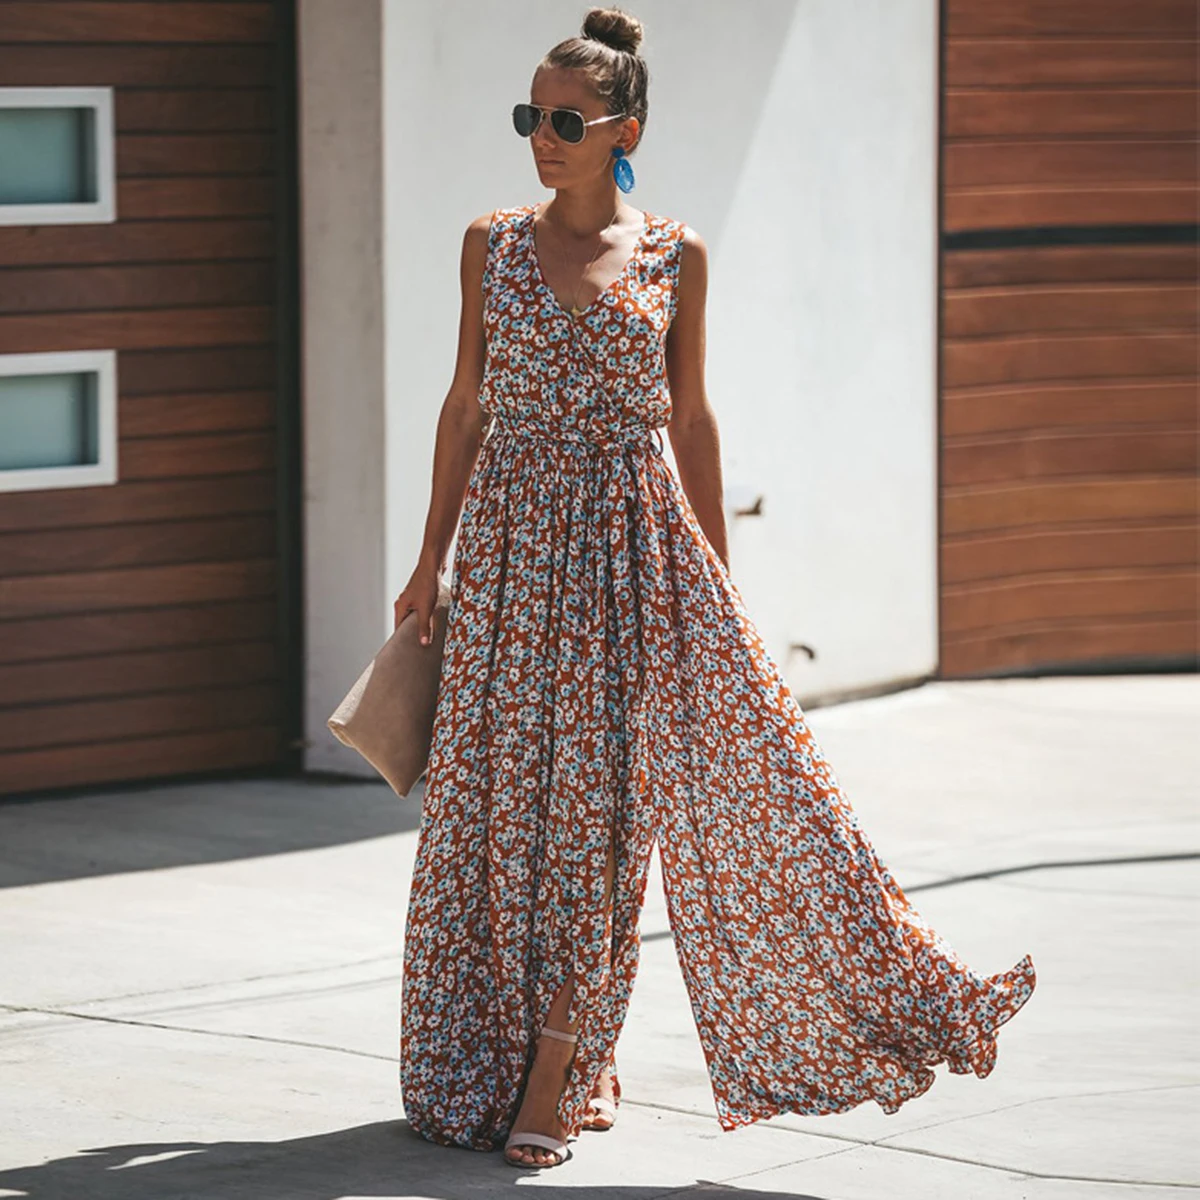 

Jastie Women Summer Dress Floral Print Maxi Dresses Bohemian Hippie Beach Long Dress Women's Clothing 2019 vestidos de verano